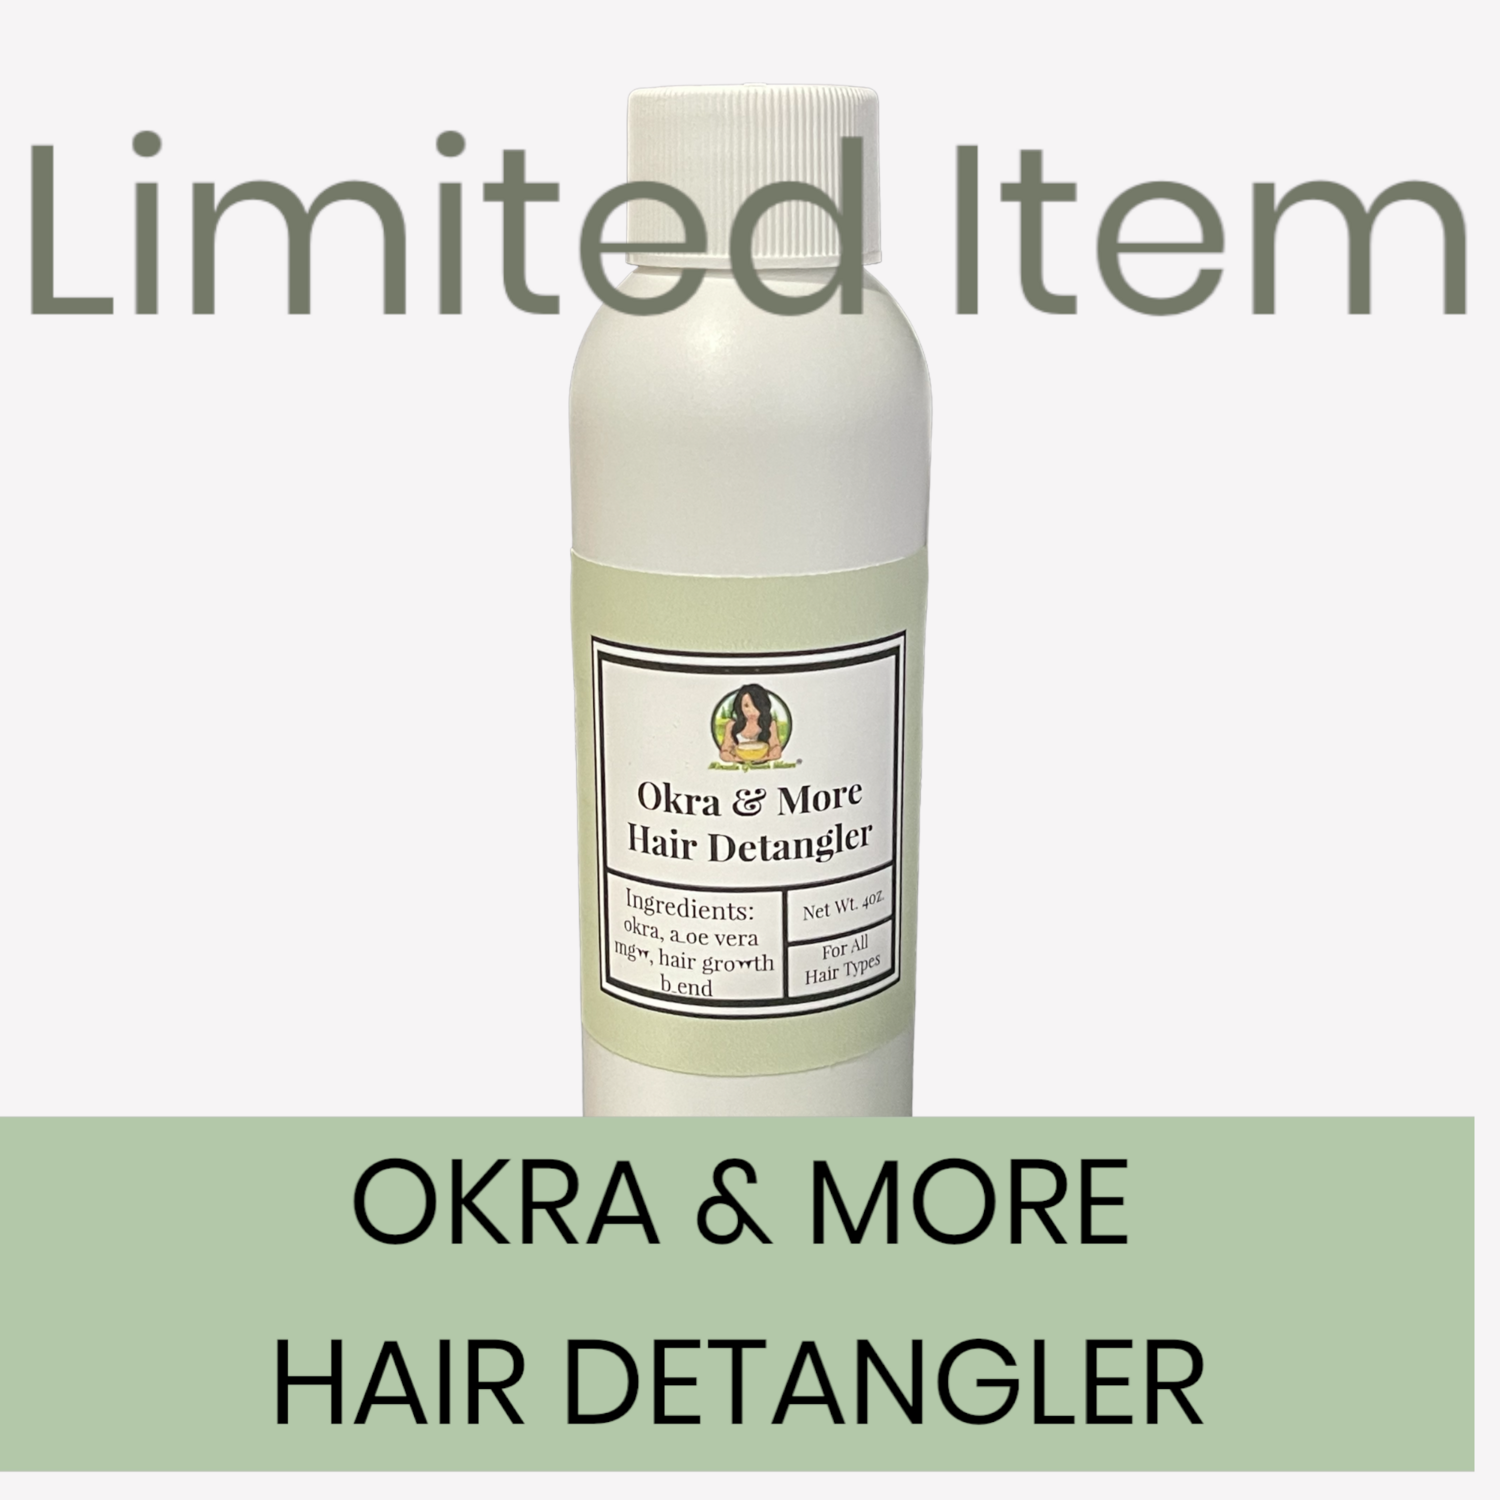 Okra & More Hair Detangle Creme (Limited Edition)